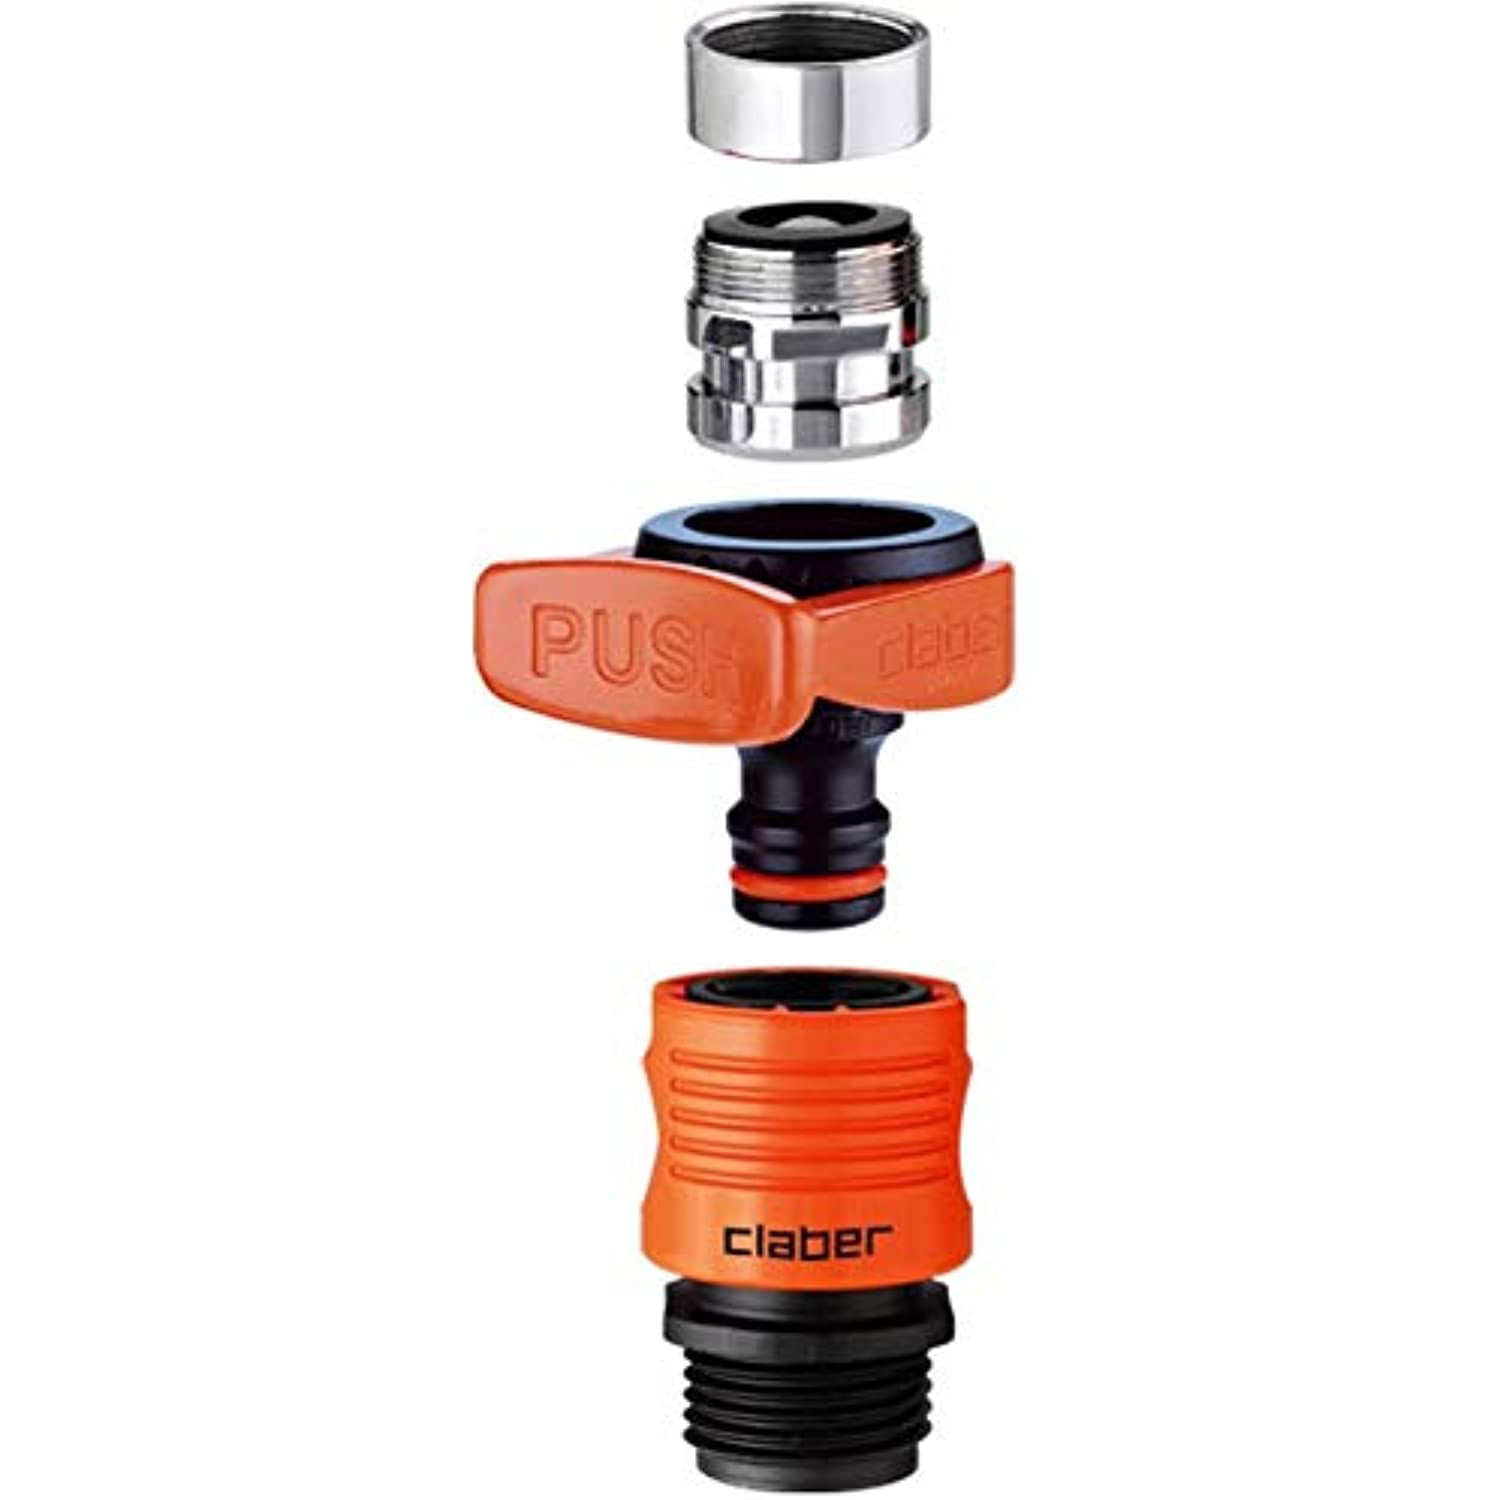 Black/Orange Details about   Claber 8587 Quick-Fit Tap Connector Set Indoor Faucet Adapter 